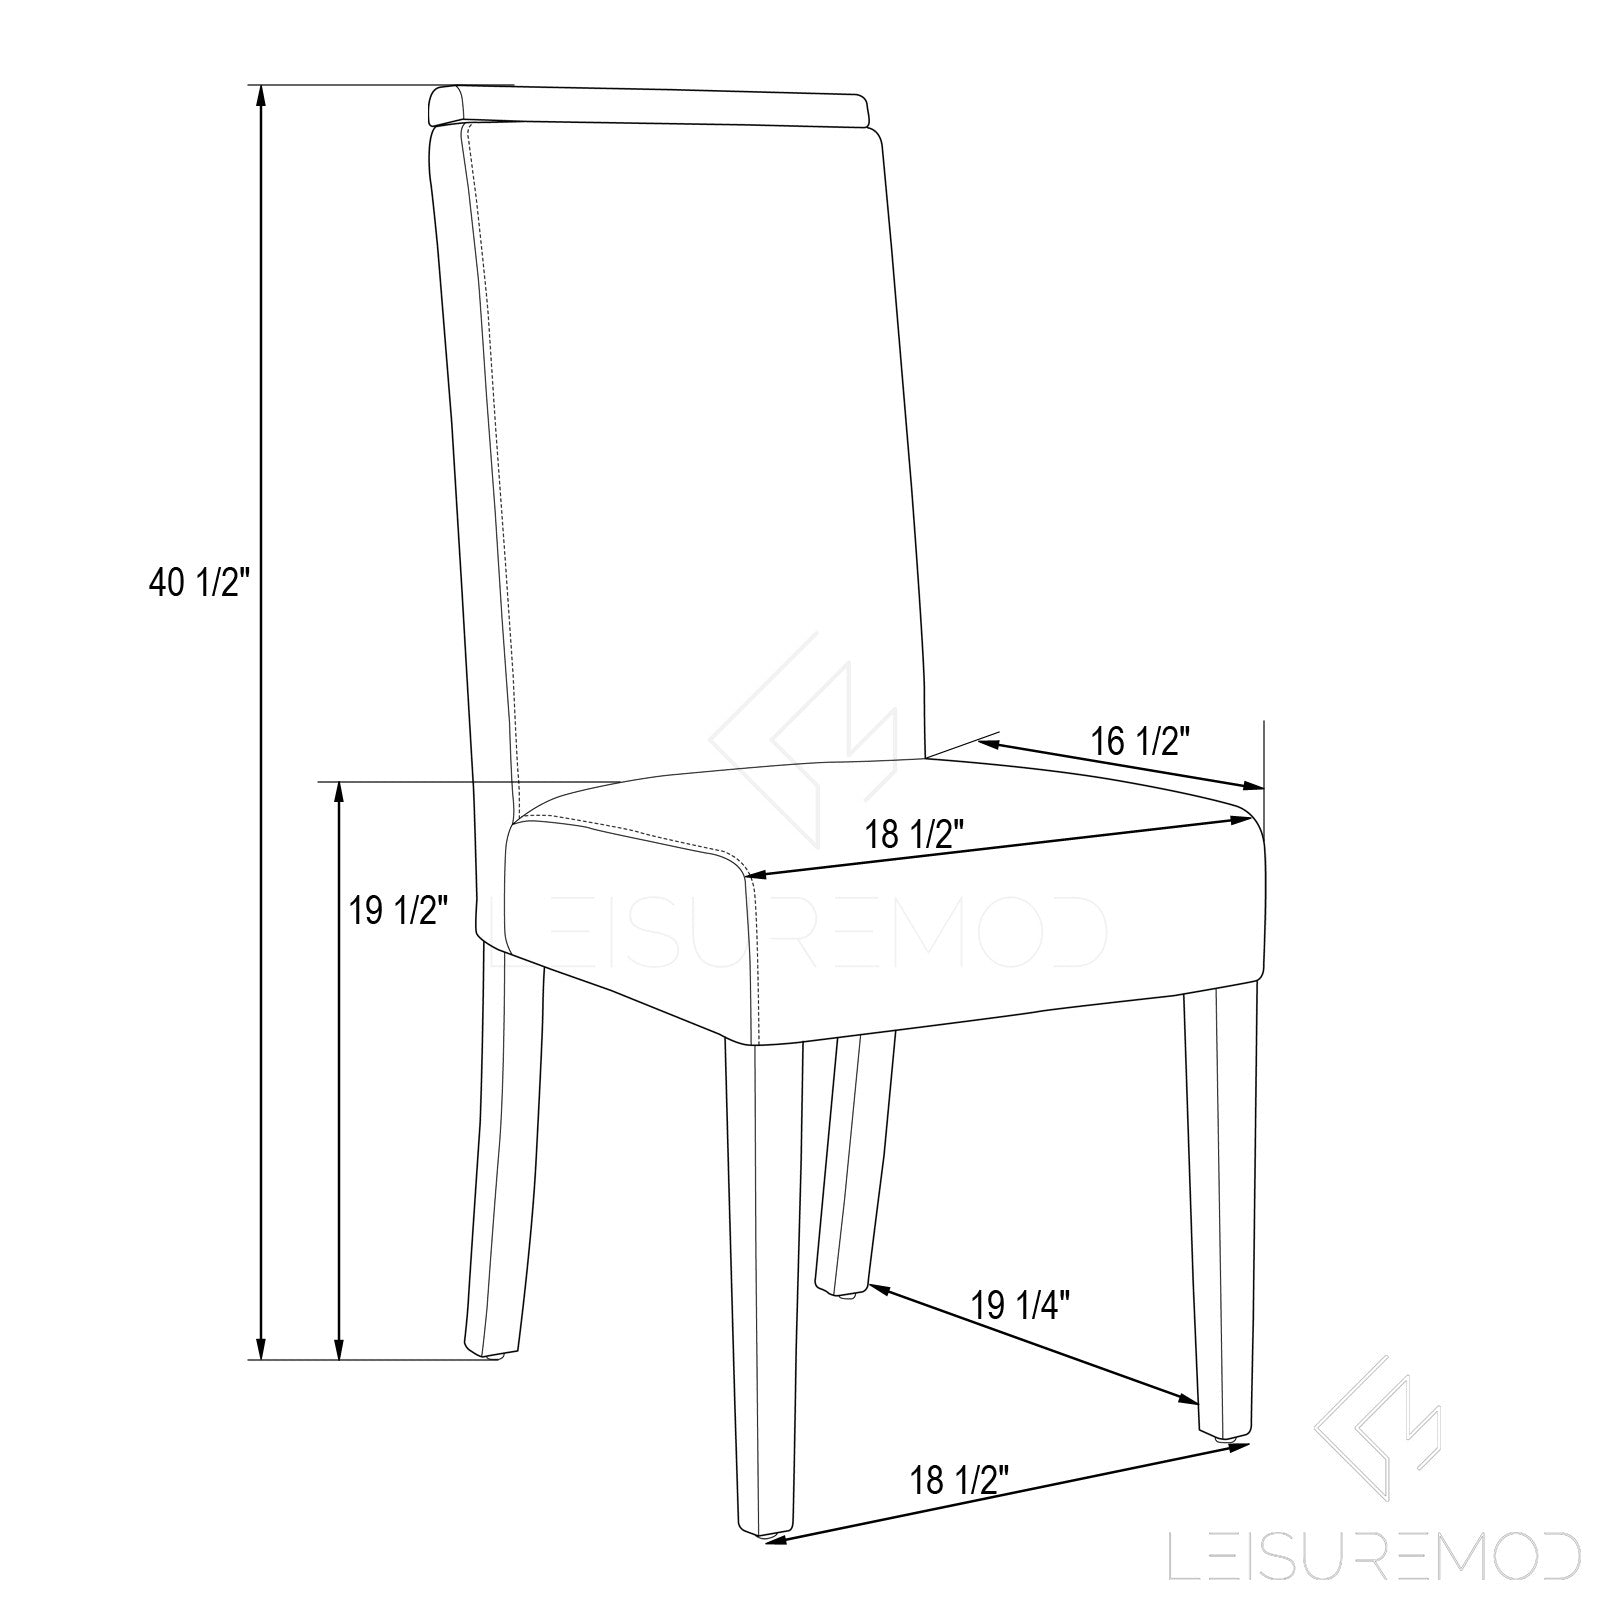 Elyse Grey Vinyl Leather Dining Chair - living-essentials